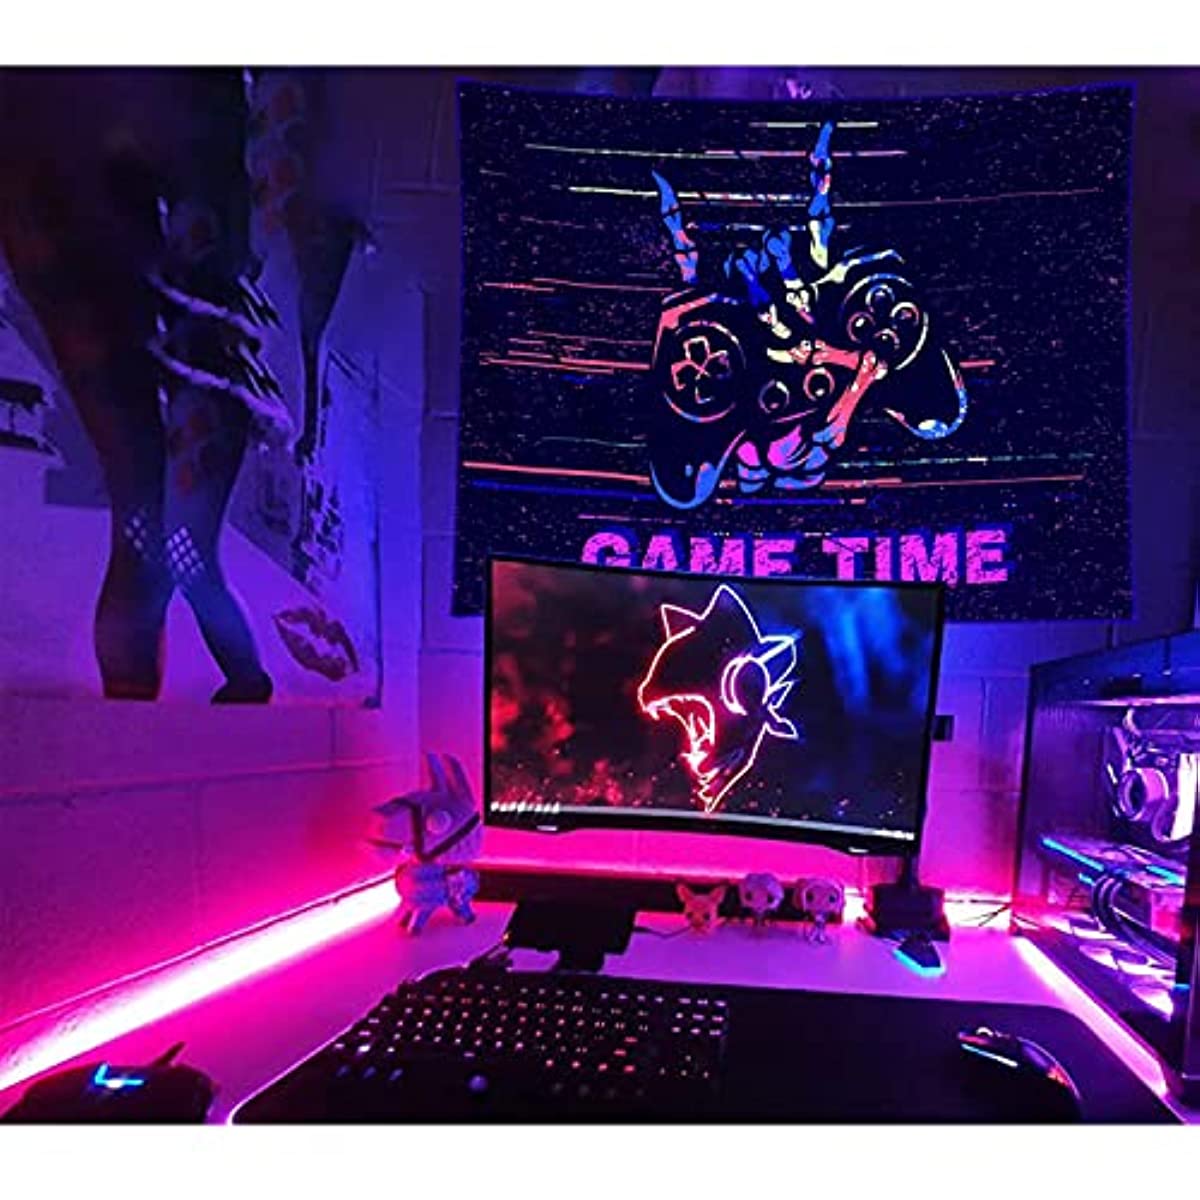 Blacklight Gaming Tapestry for Boys Room Wall Hanging, UV Reactive